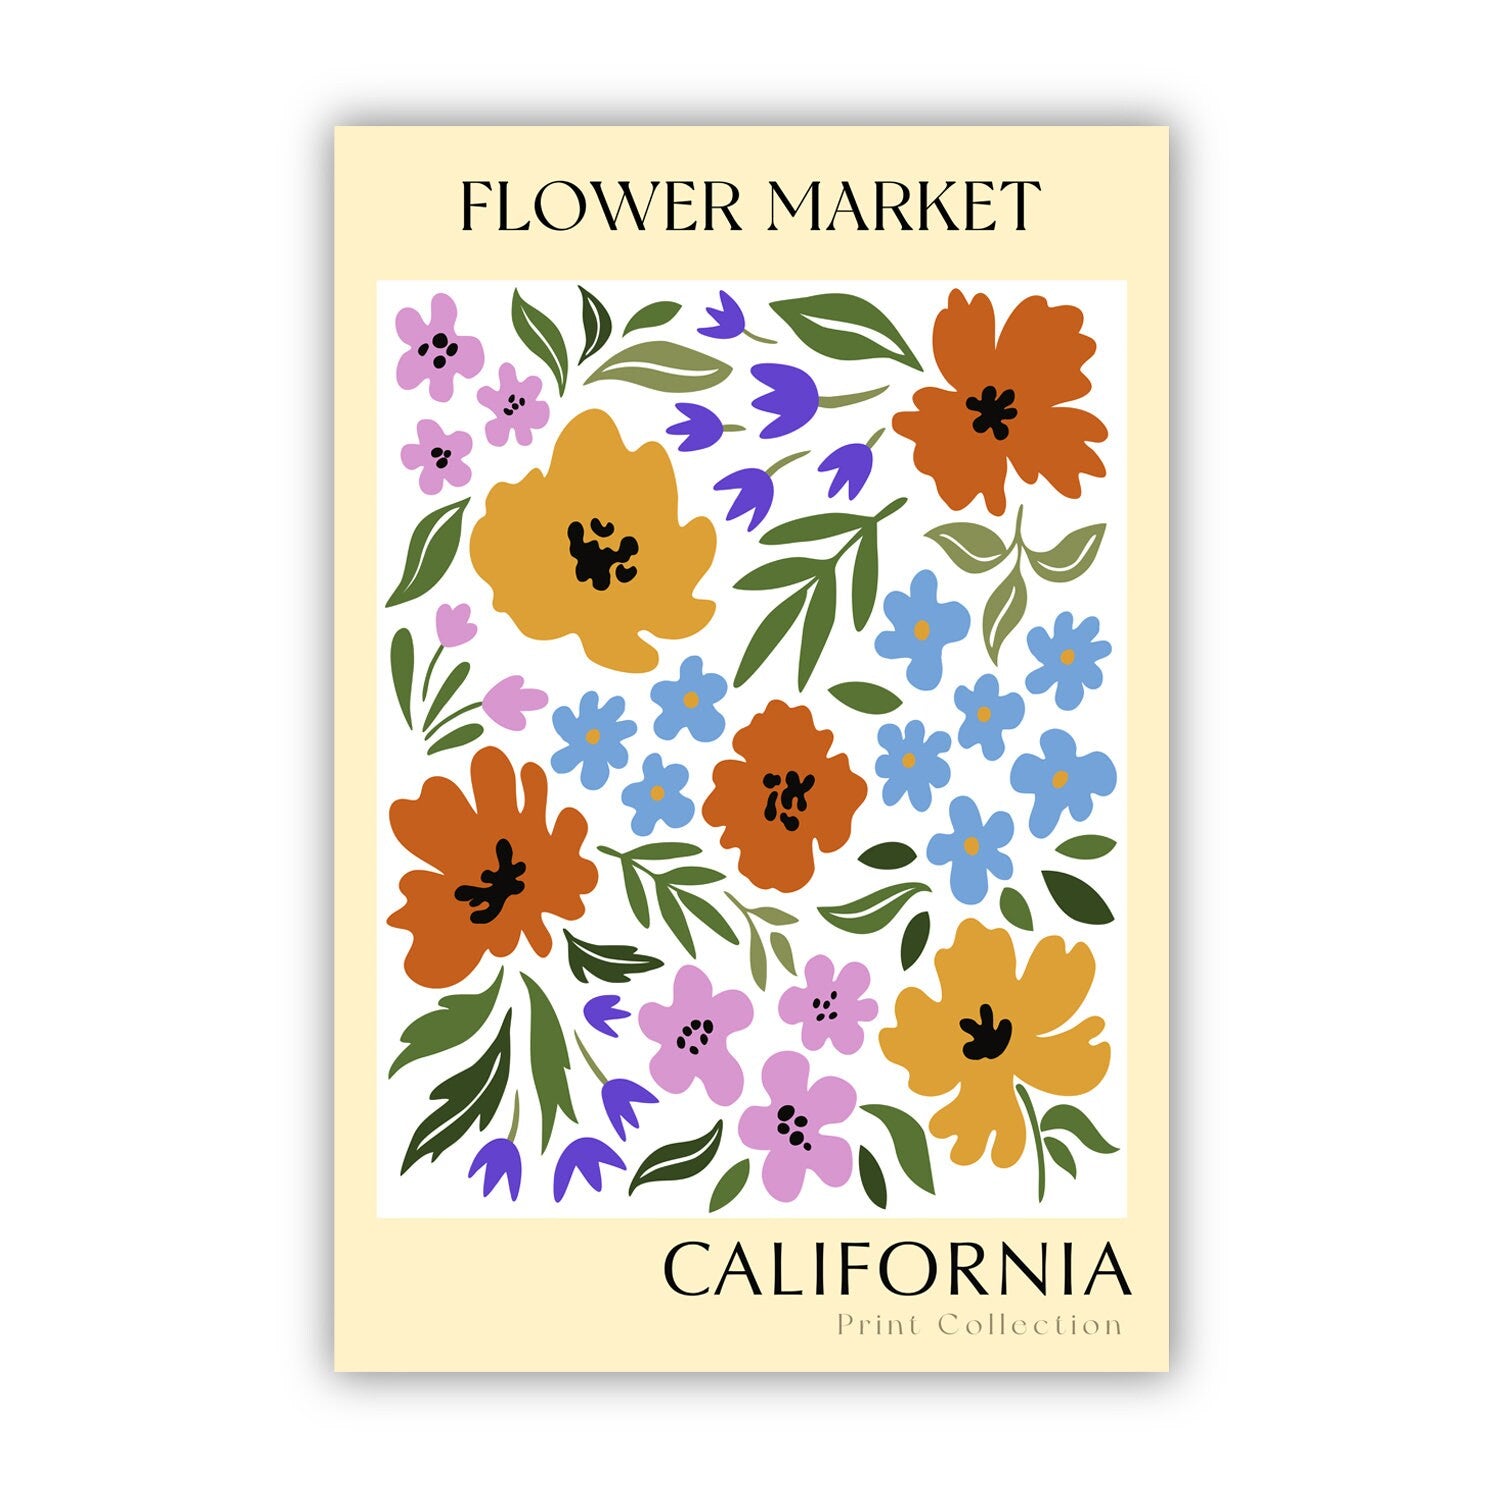 California State flower print, Poster art, California flower market poster, Botanical poster, Natural poster artwork, Boho floral wall art